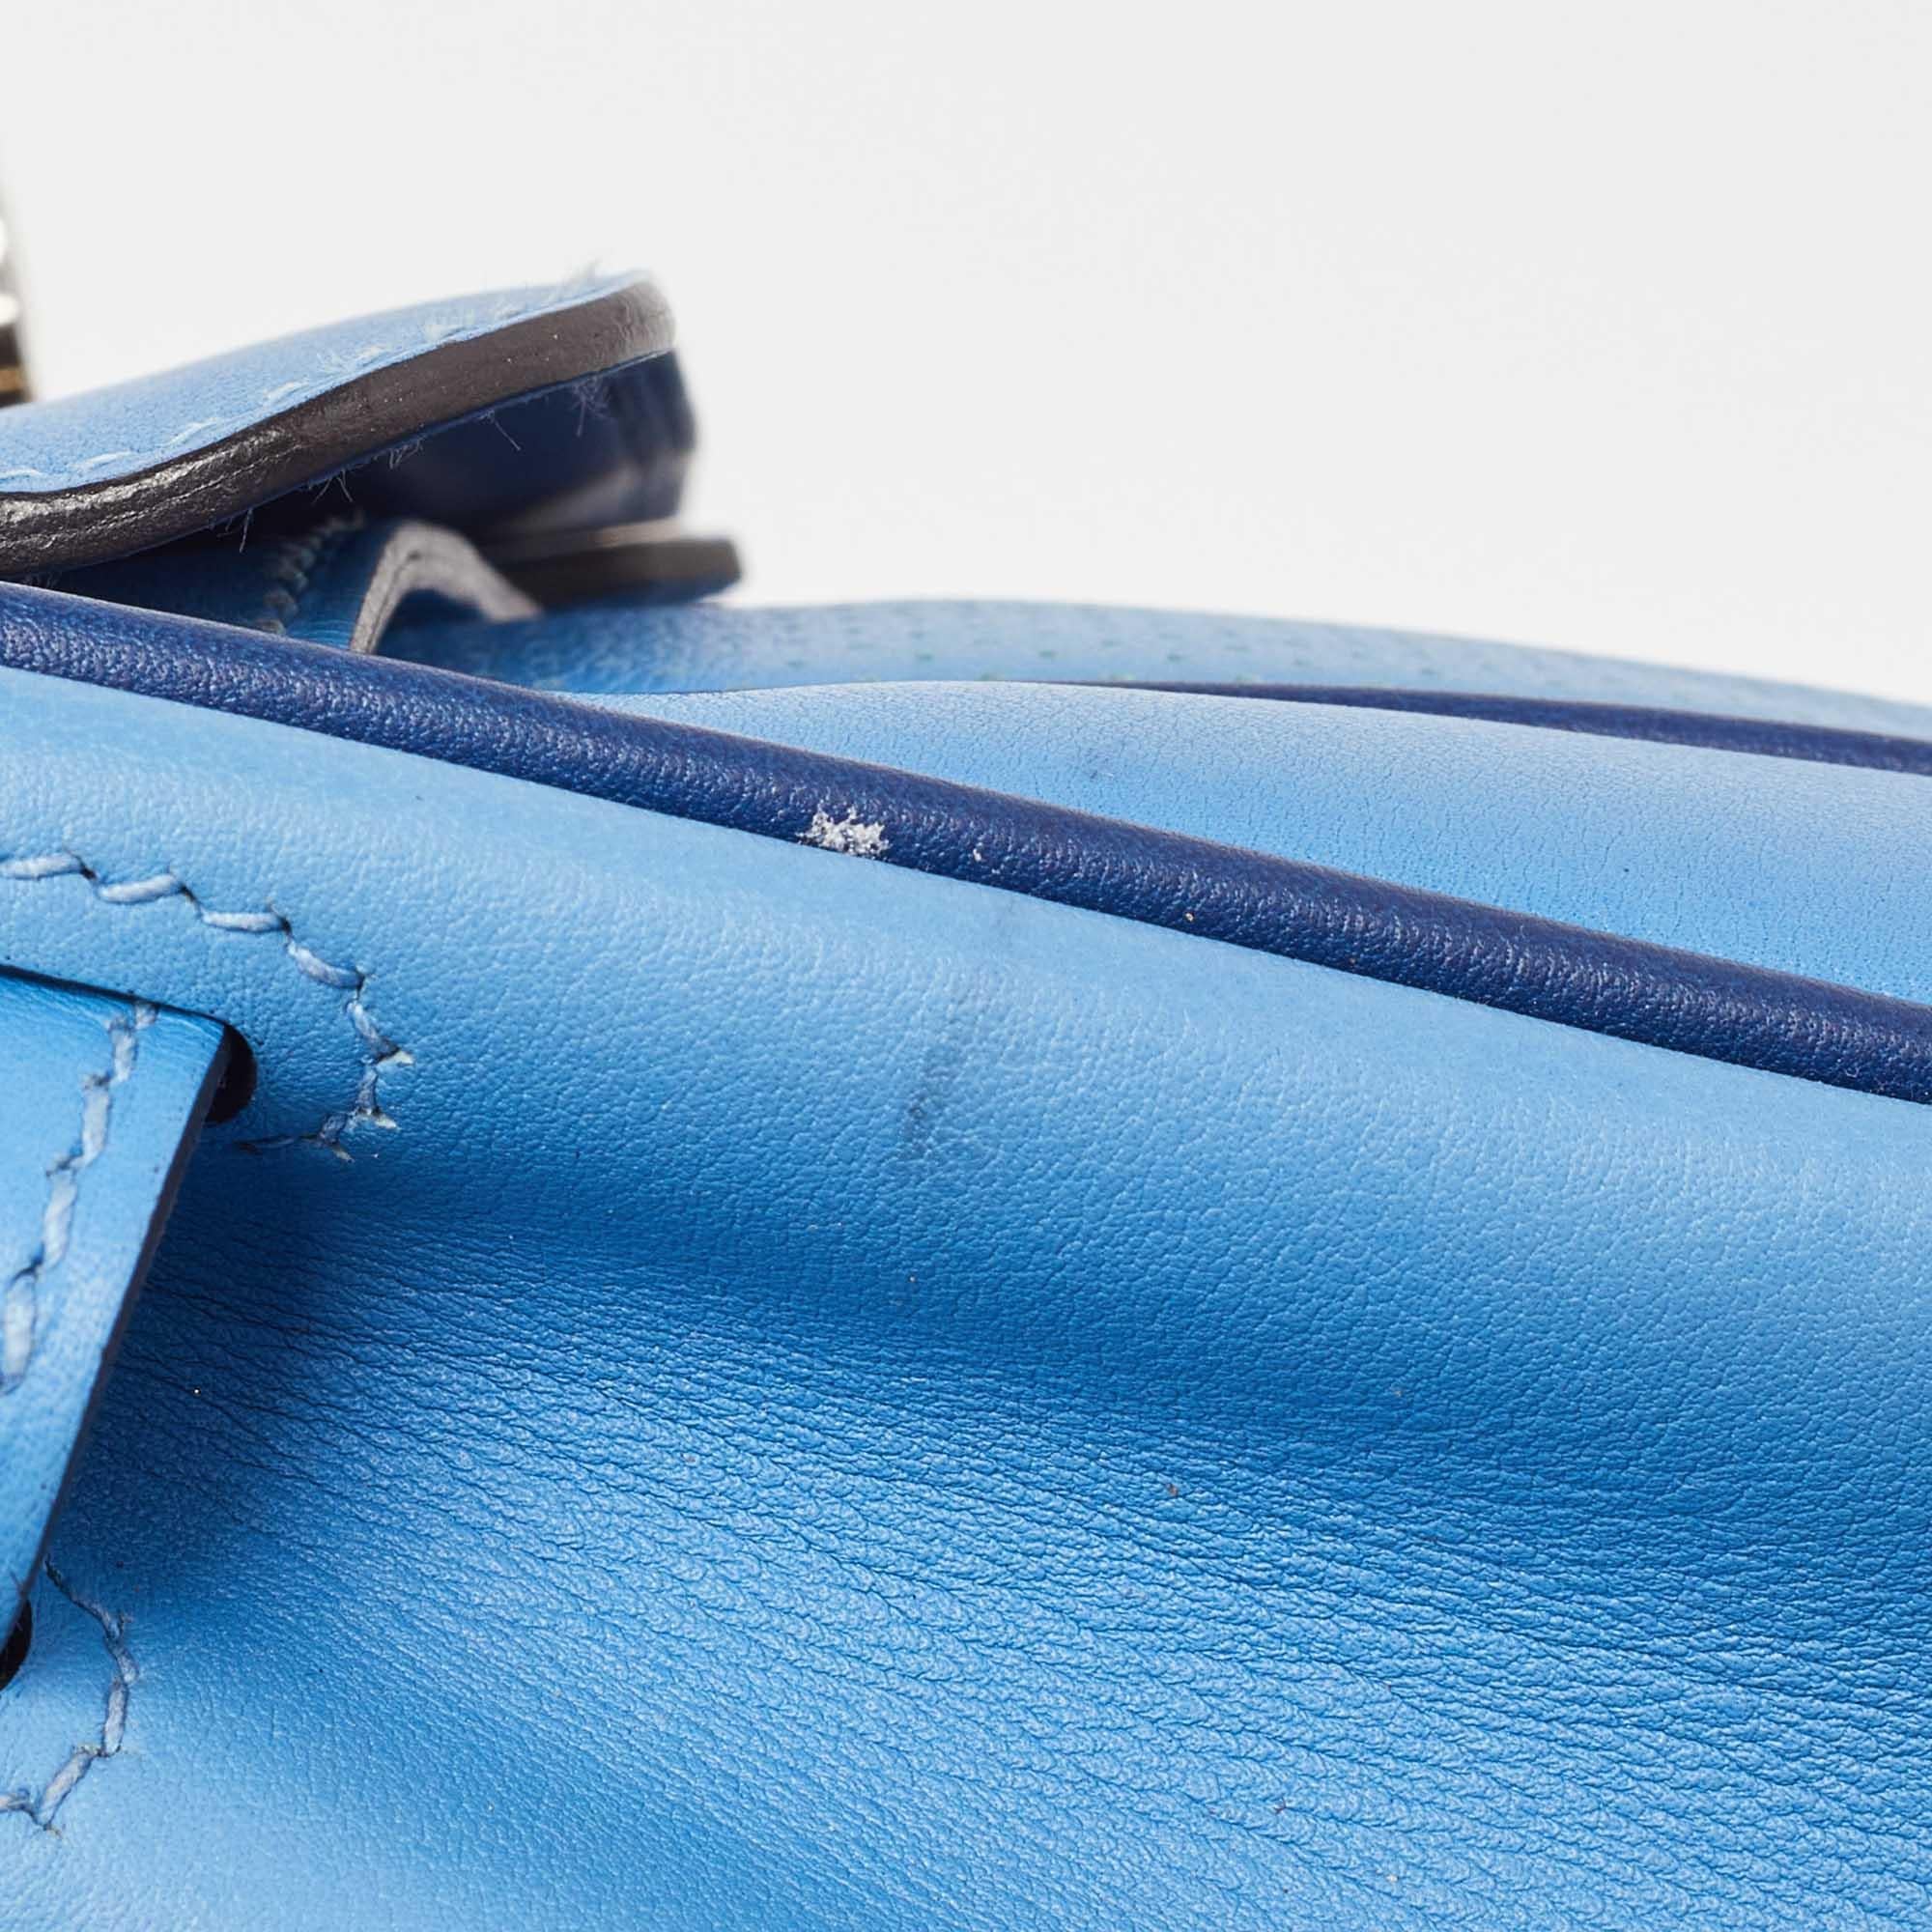 Women's Hermes Bleu Paradis/Saphir Swift Leather Palladium Hardware Mini Berline Bag